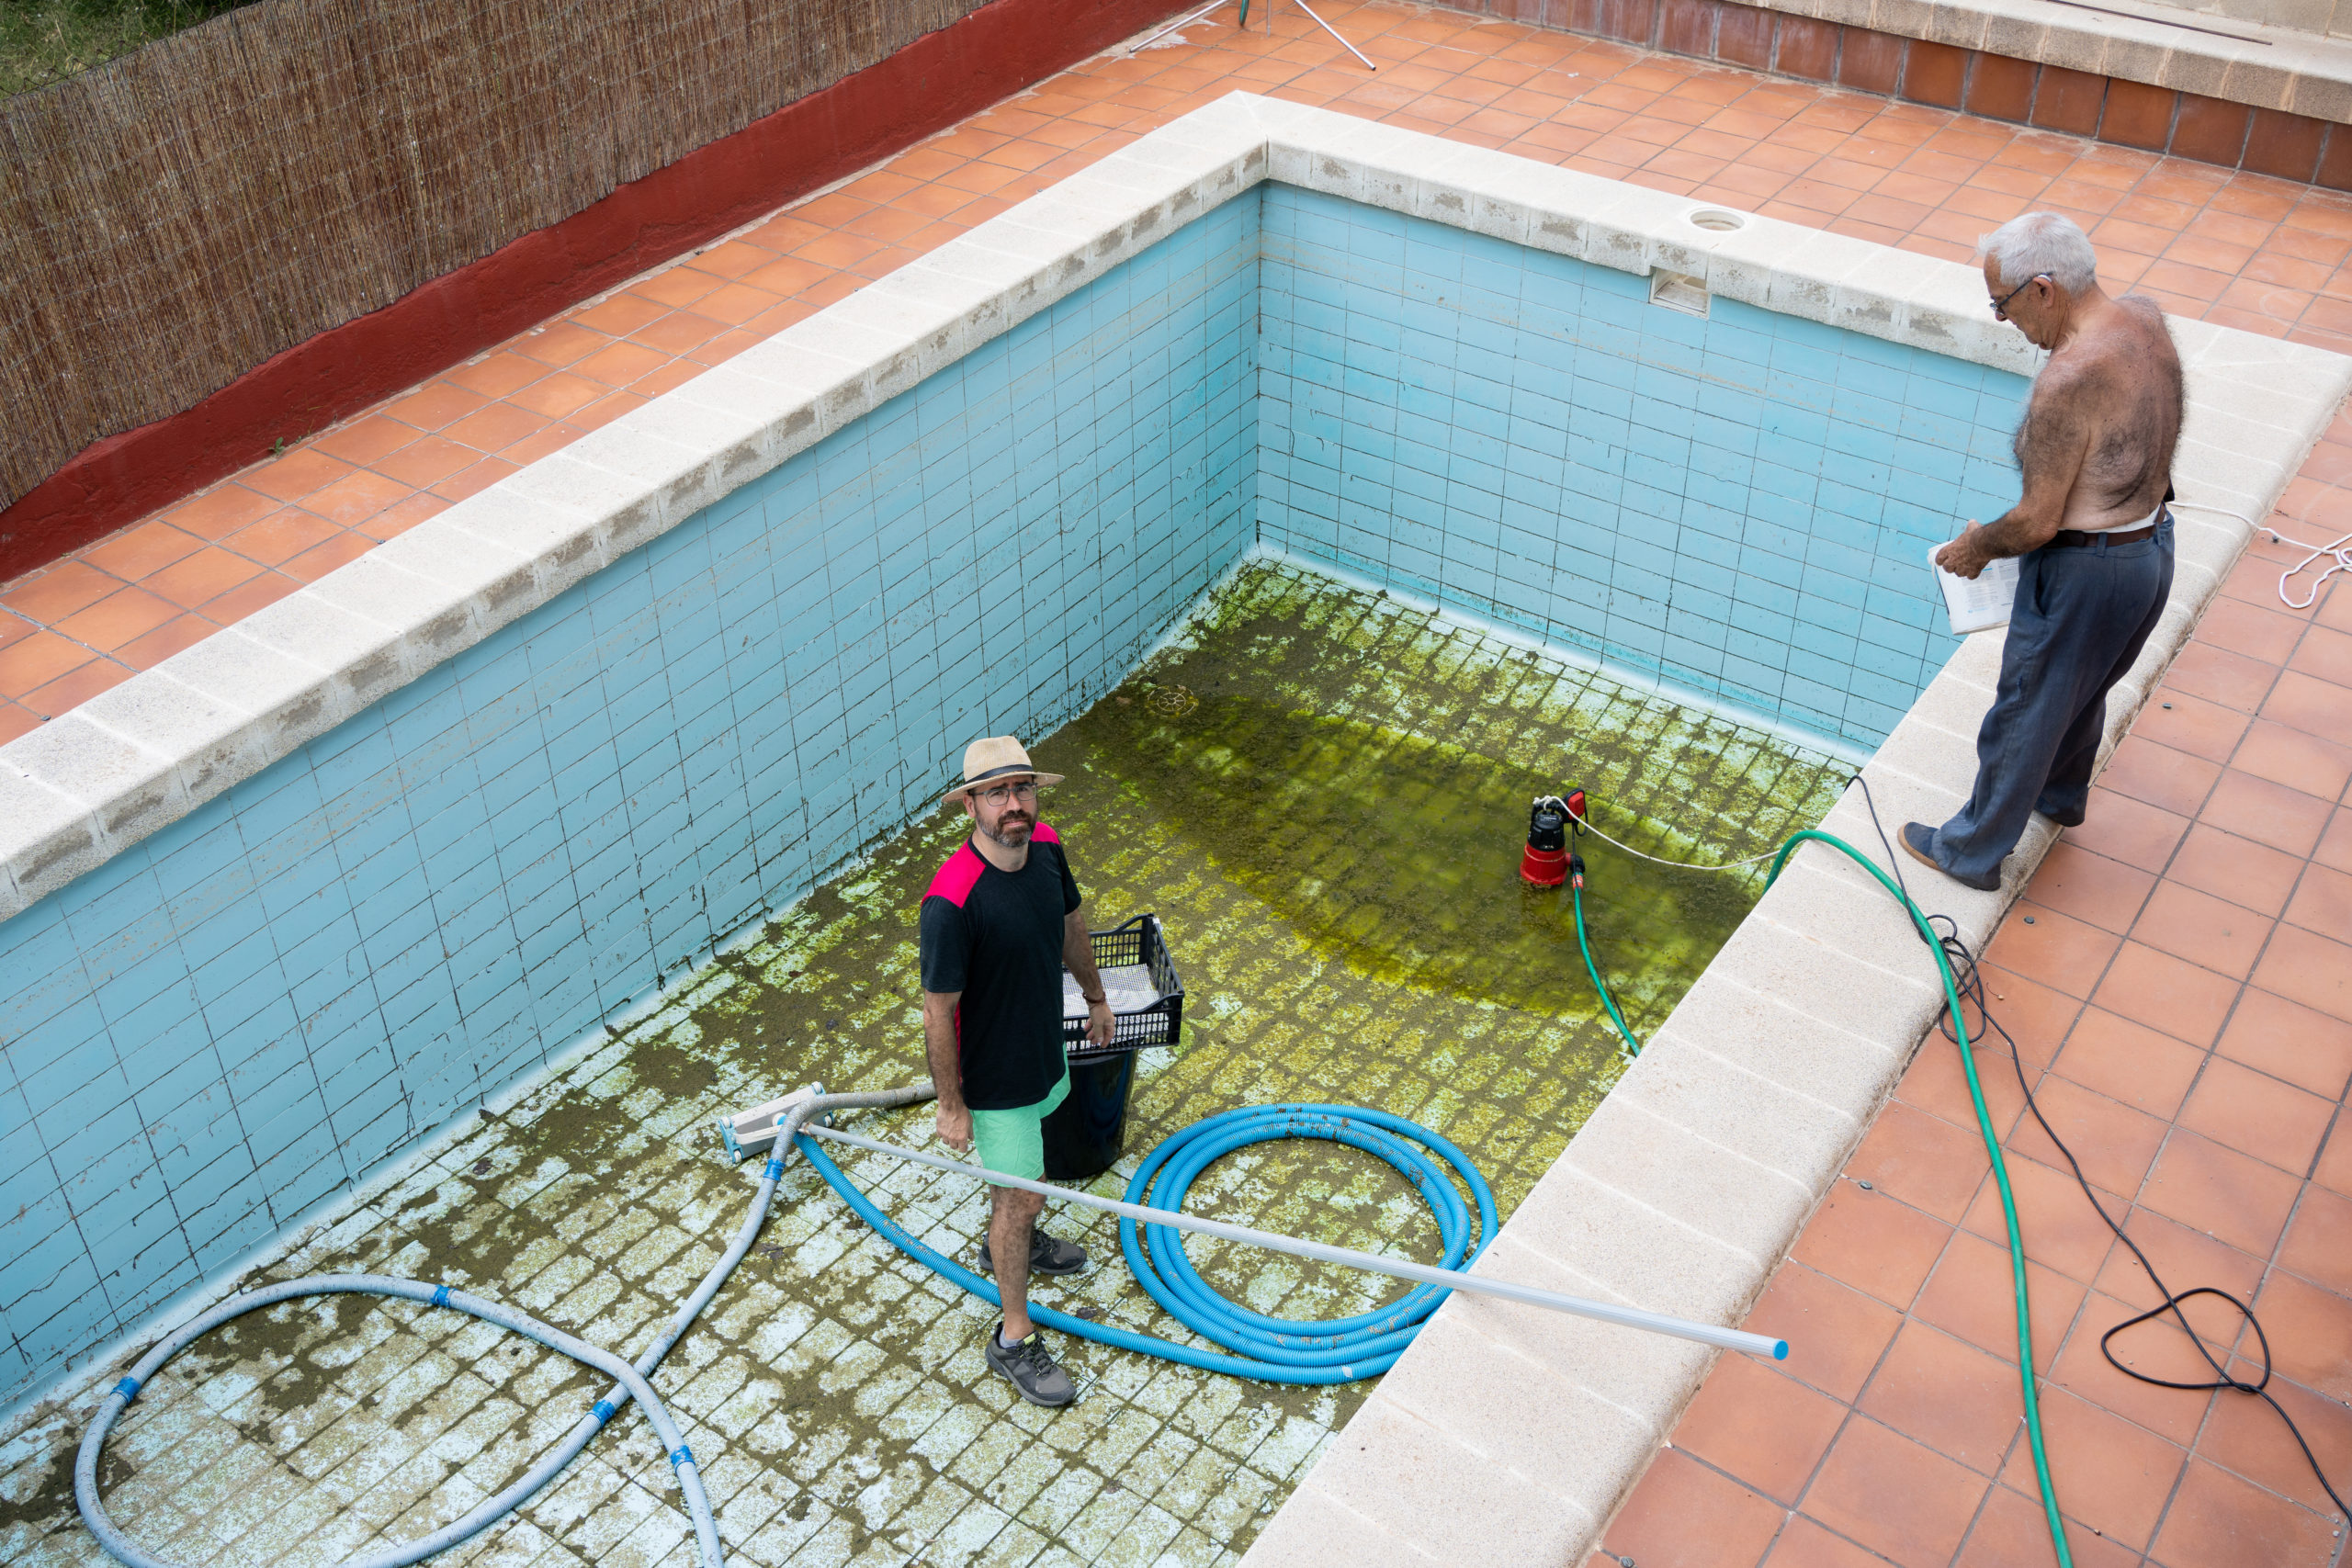 drained pool with algae